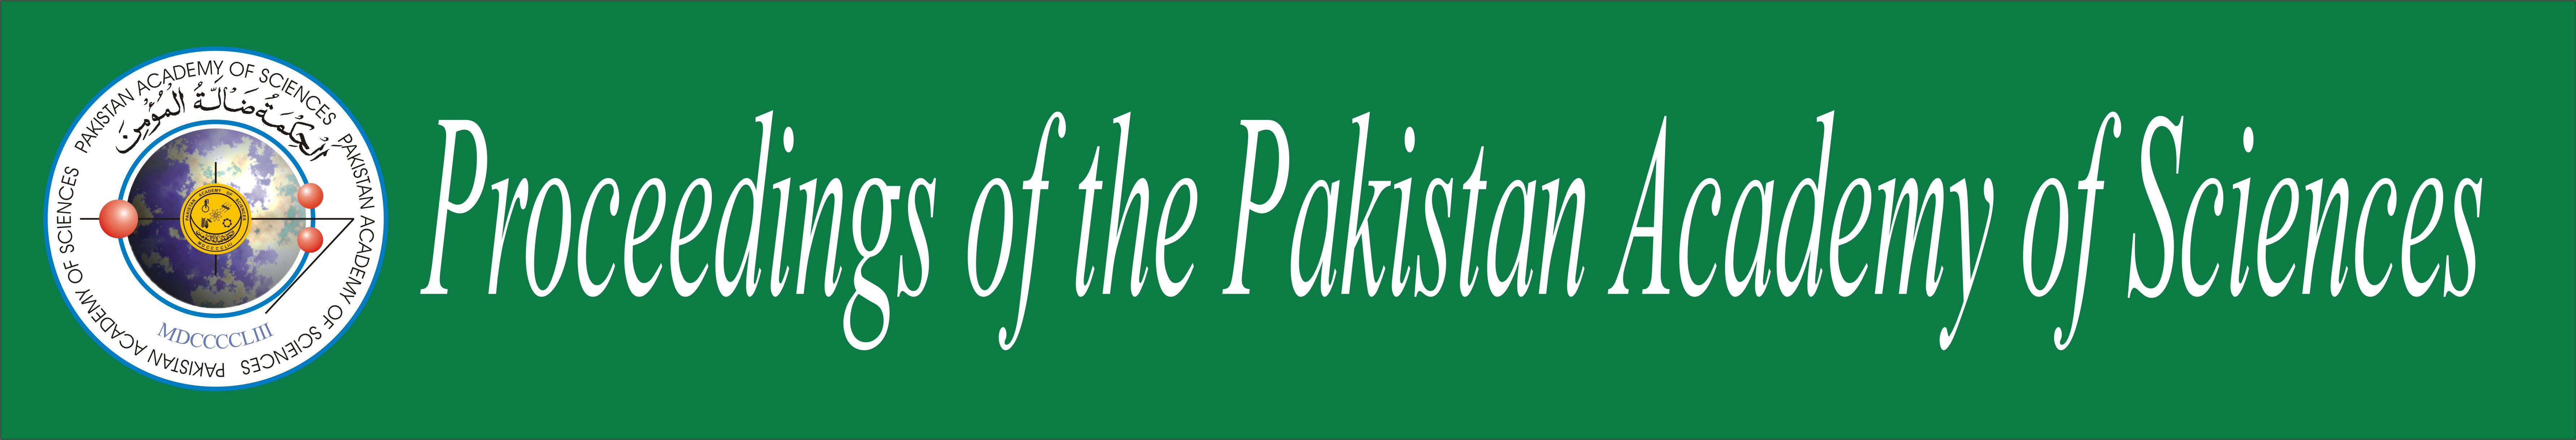 Proceedings of the Pakistan Academy of Sciences